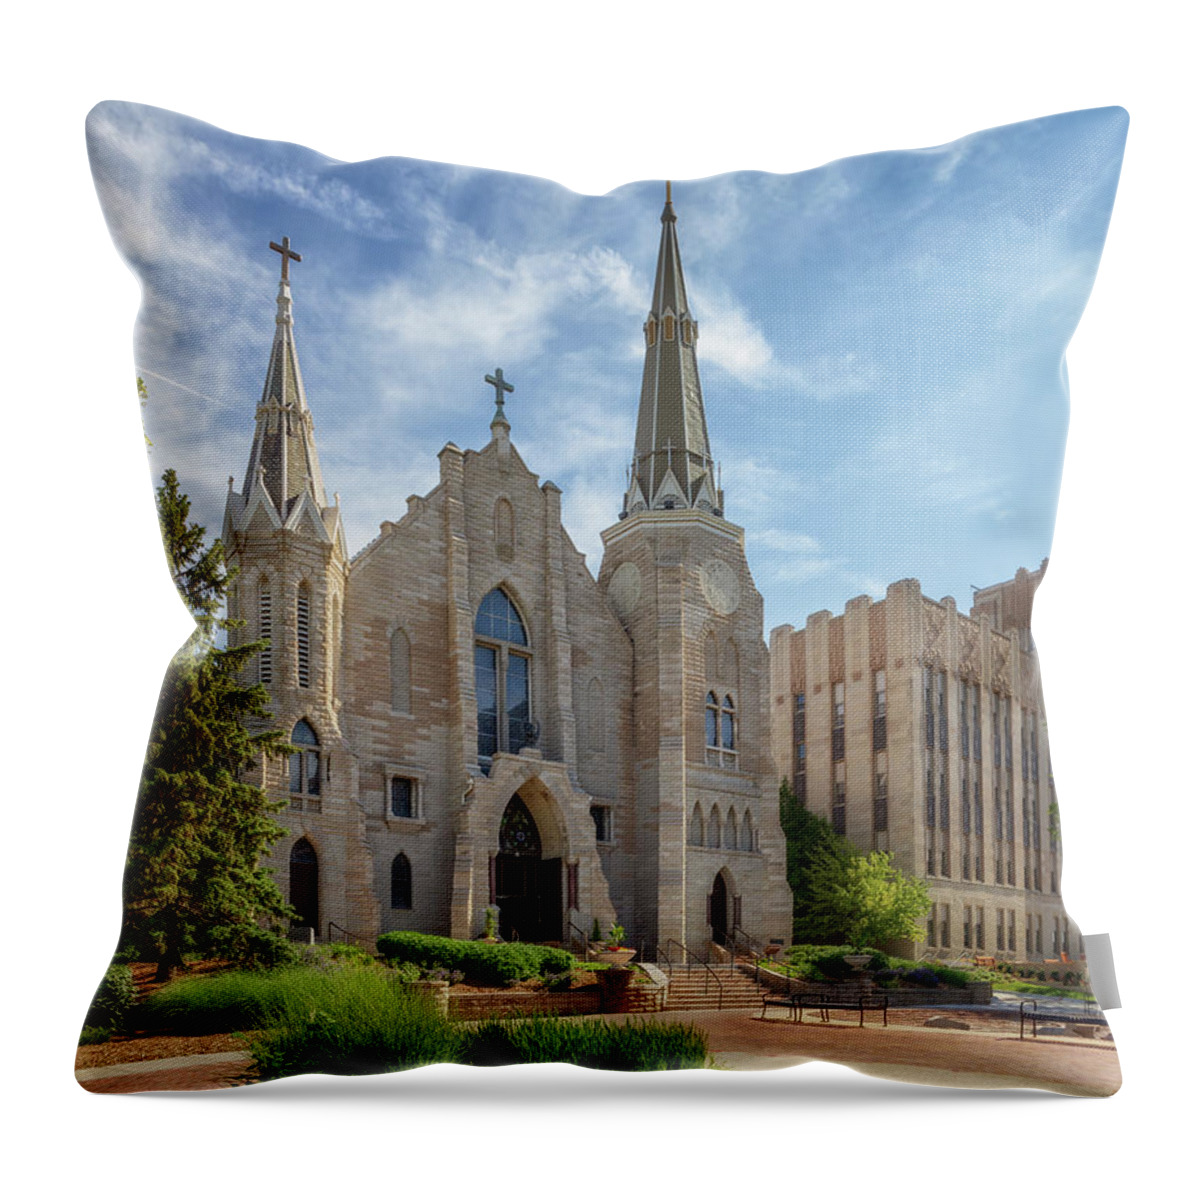 Creighton University Throw Pillow featuring the photograph St. John's Parish - Creighton University by Susan Rissi Tregoning